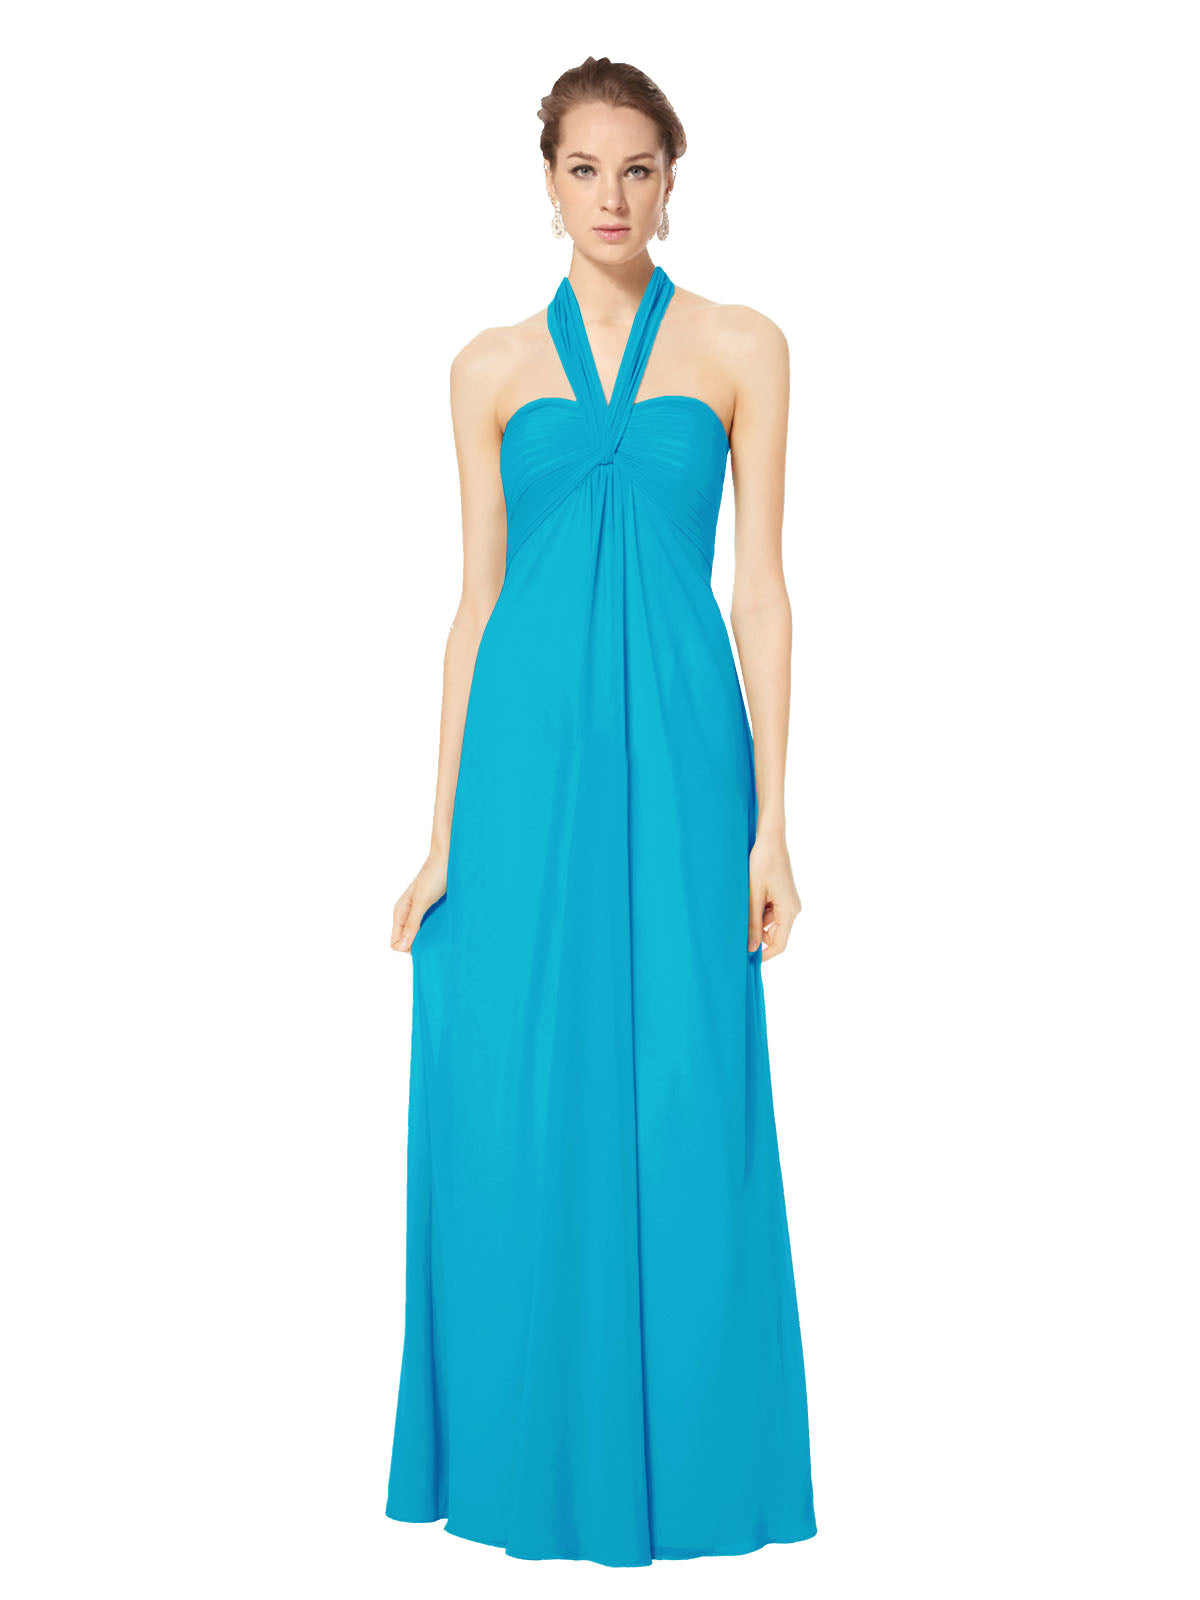 Long Empire Halter Sleeveless Turquoise Chiffon Bridesmaid Dress Kennedy